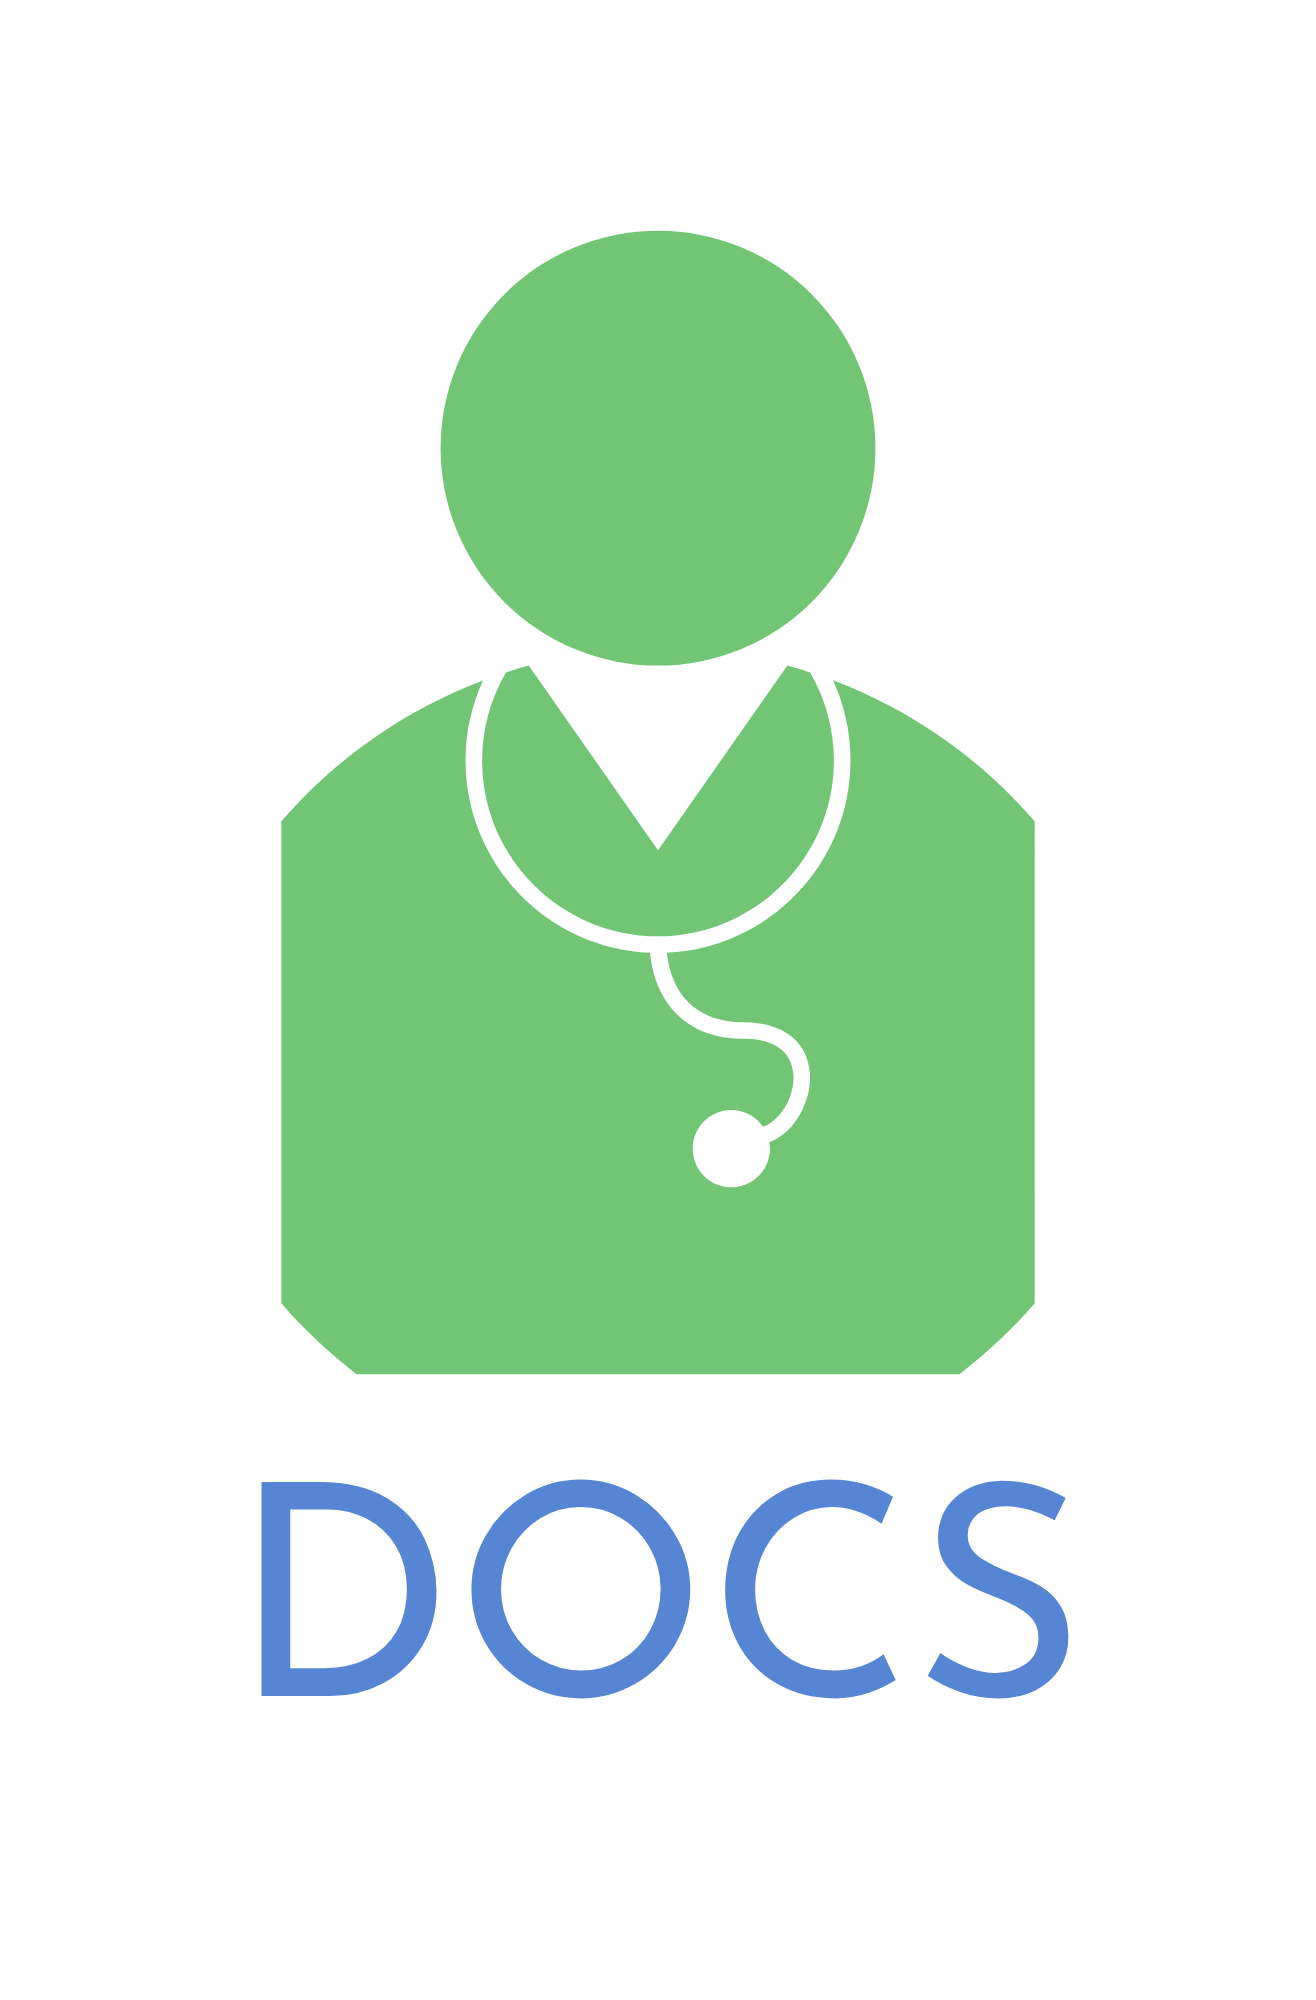 Docs